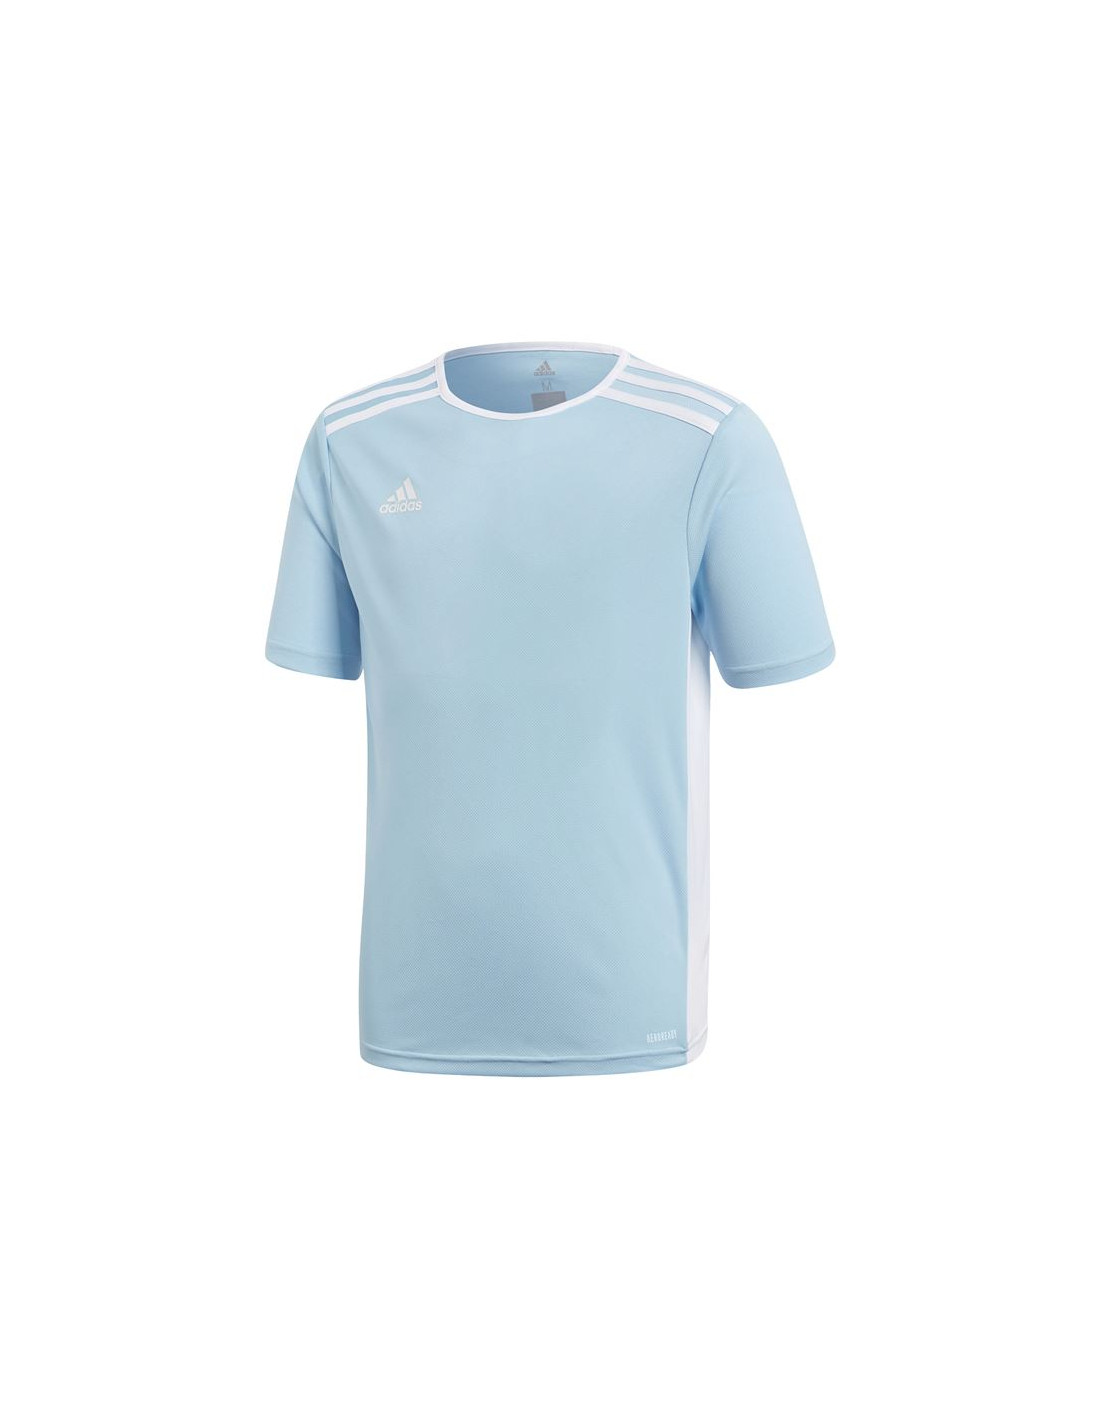 Camiseta fútbol adidas entrada jr light blue